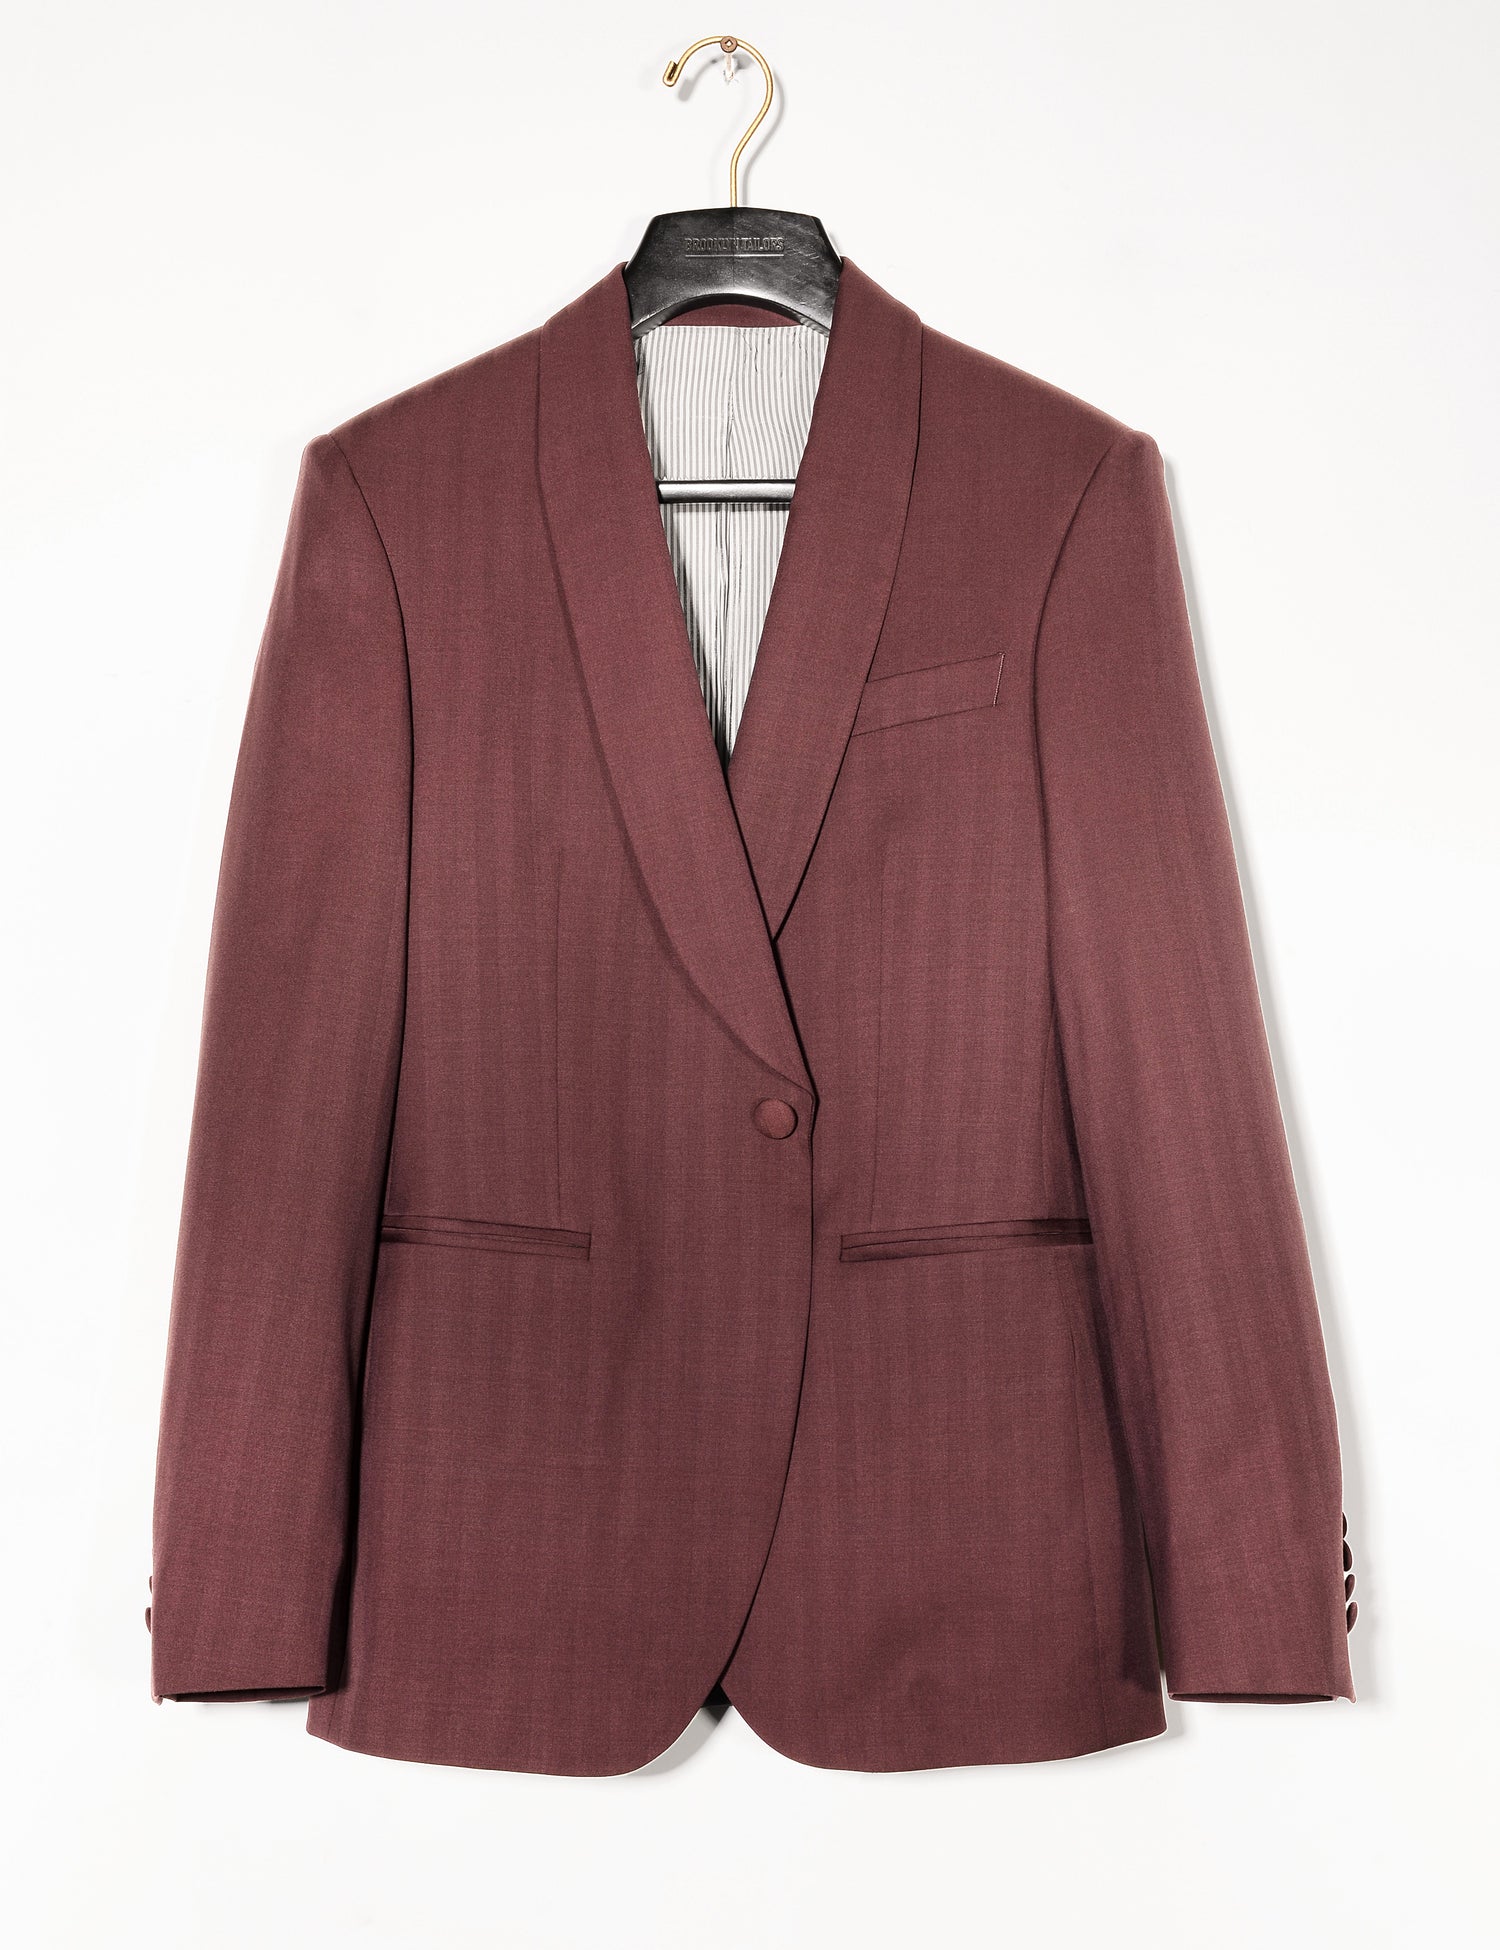 Brooklyn Tailors BKT50 Shawl Collar Dinner Jacket in Wool Herringbone - Syrah full length shot on hanger